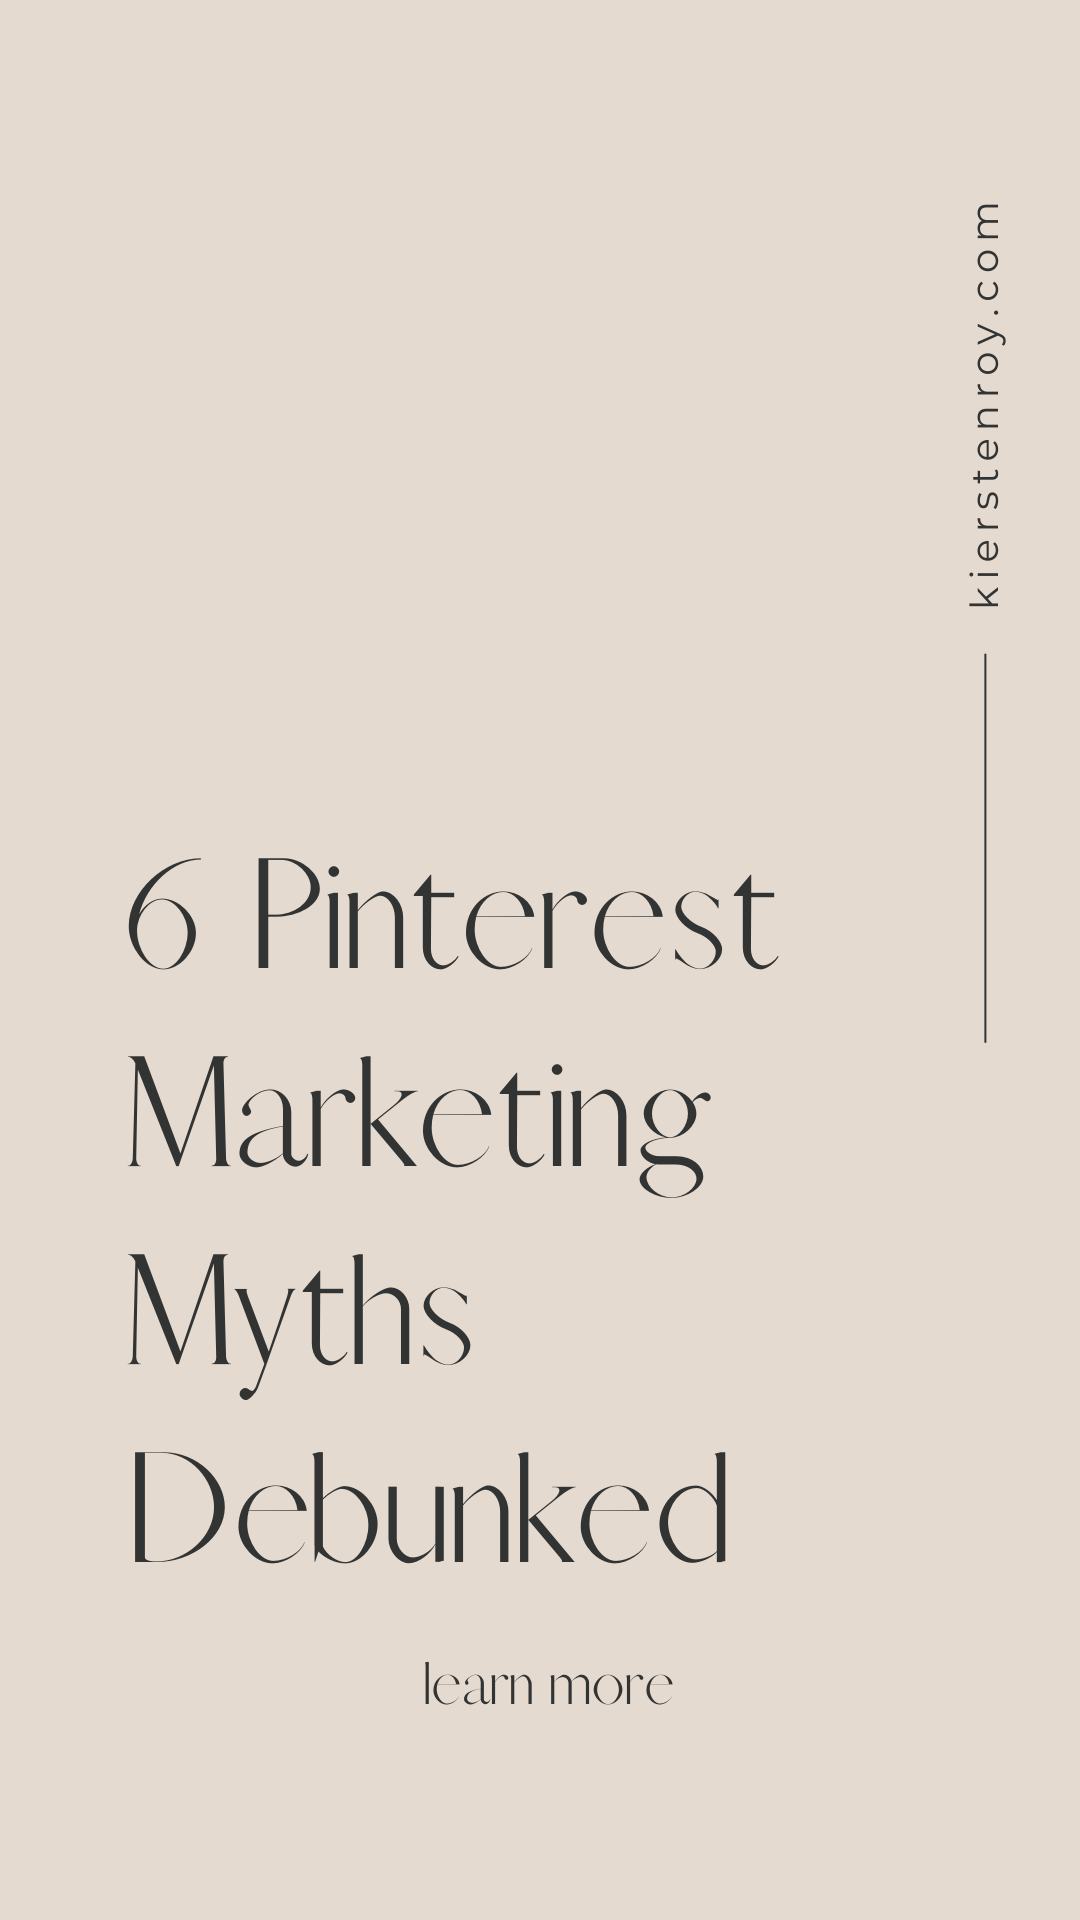 6 Pinterest Marketing Myths Debunked